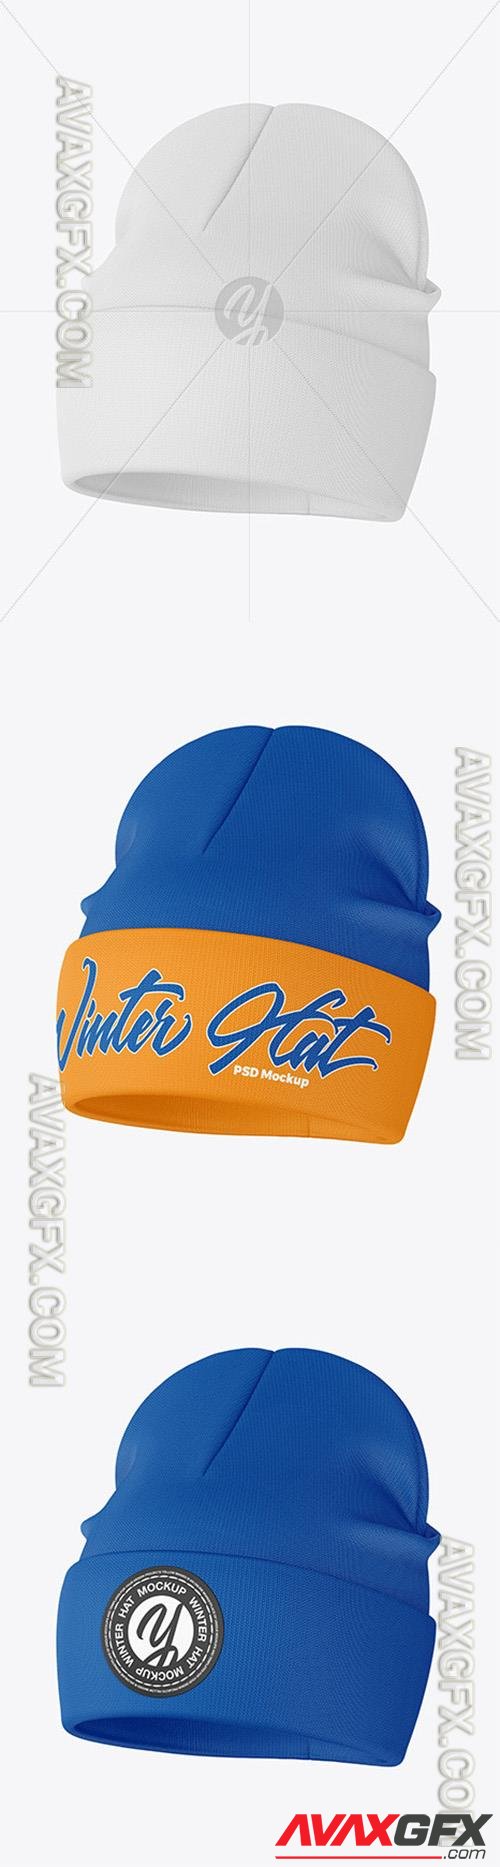 Winter Hat Mockup 91670